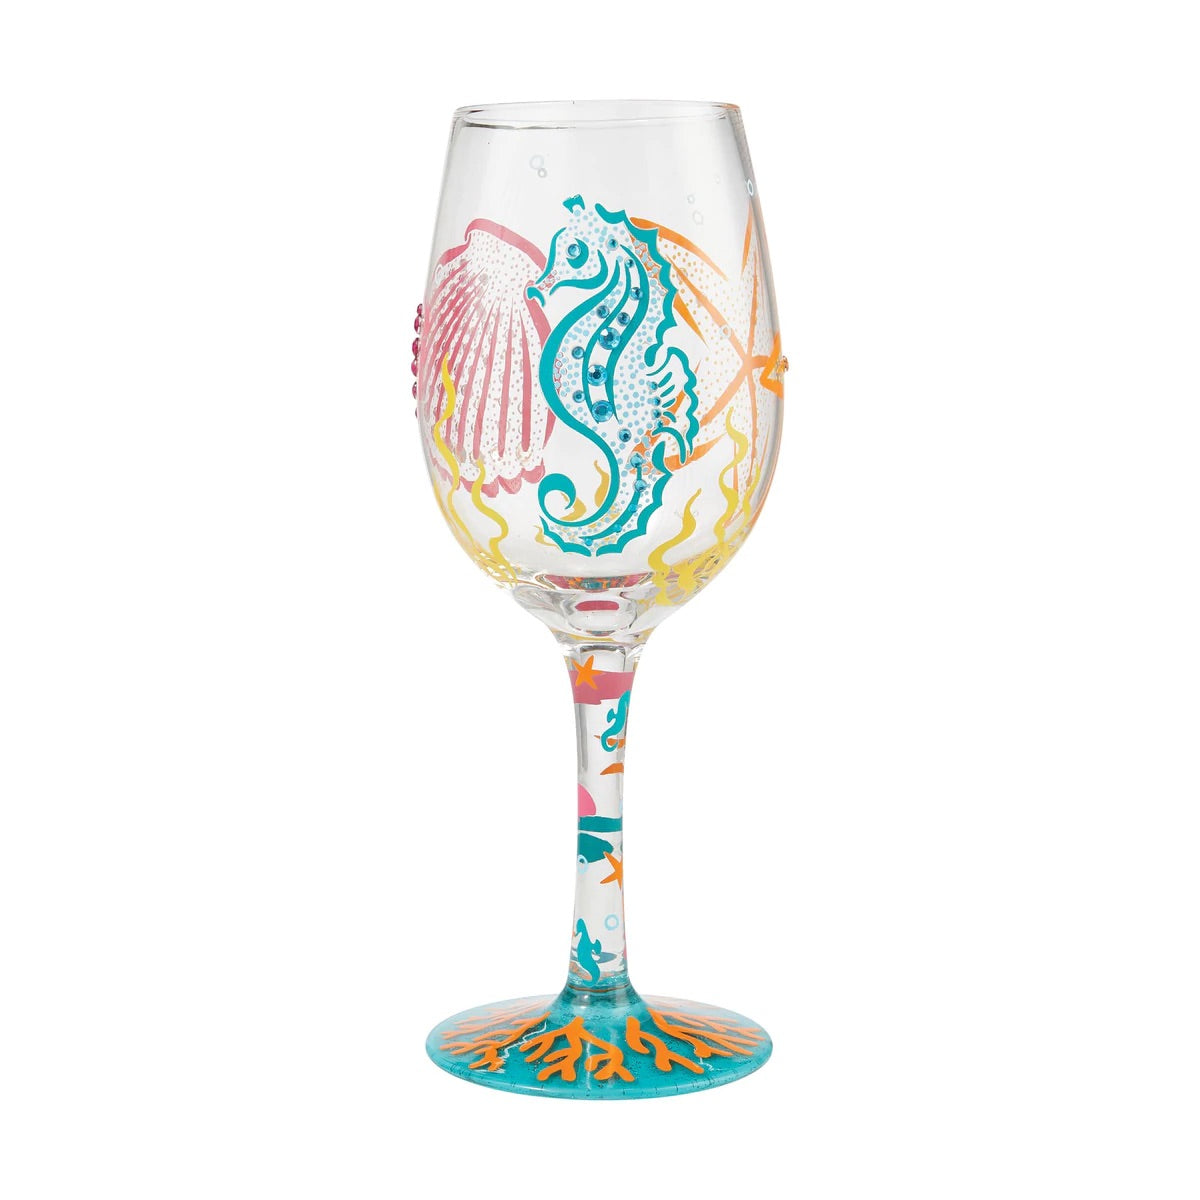 Lolita “Coastal” 15oz Wine Glass Item #6007486